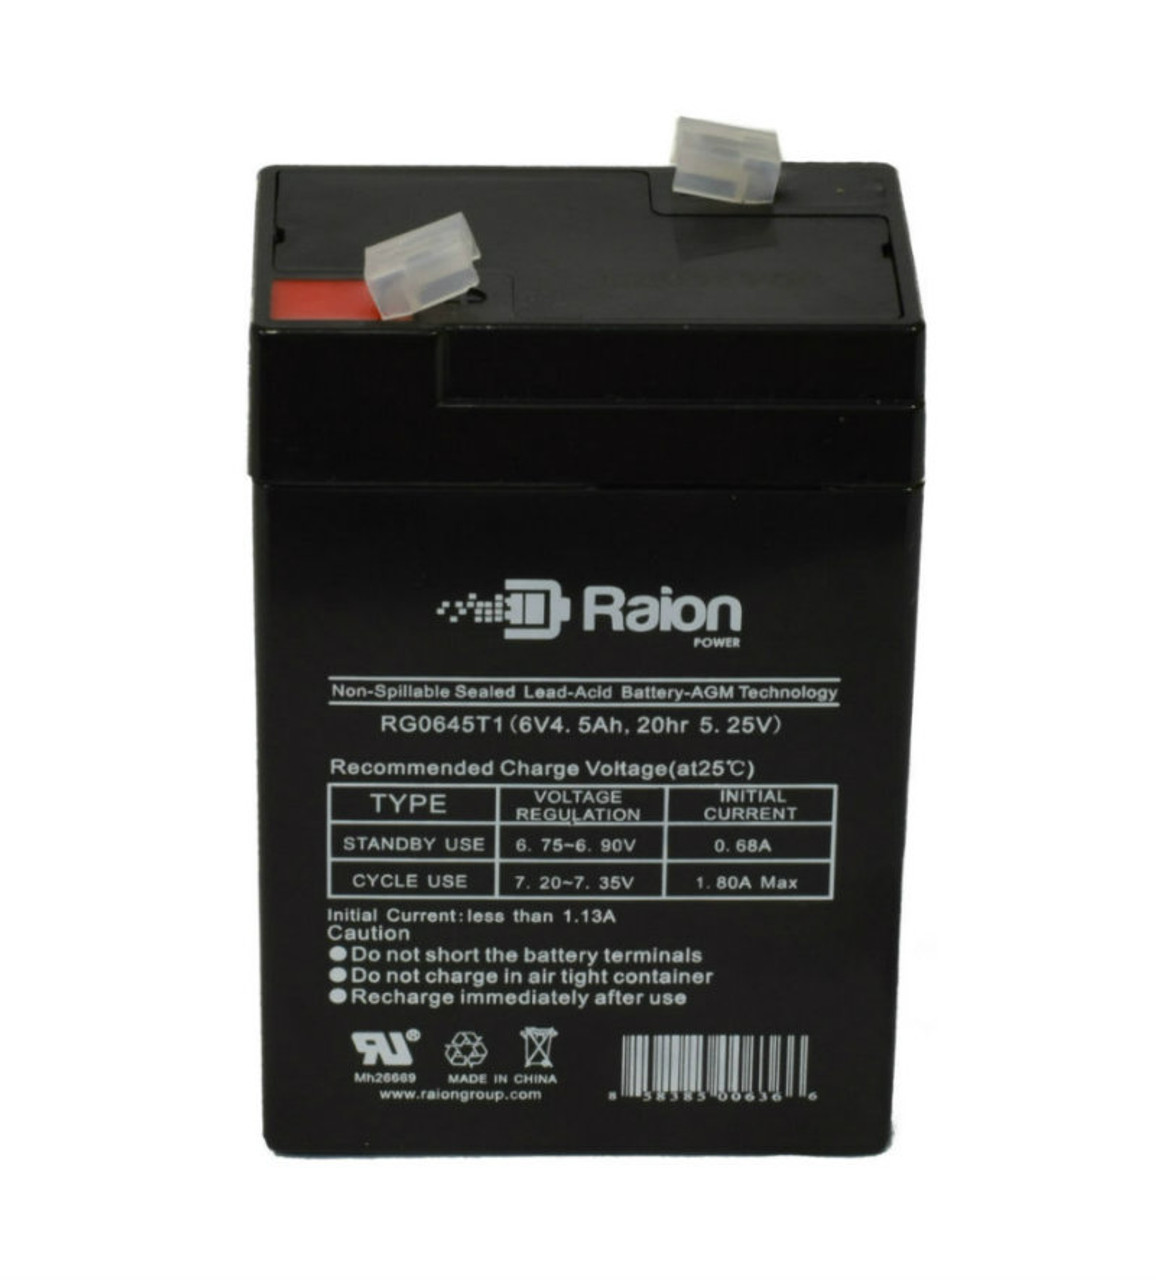 Raion Power RG0645T1 Replacement Battery Cartridge for Sonnenschein A206/4